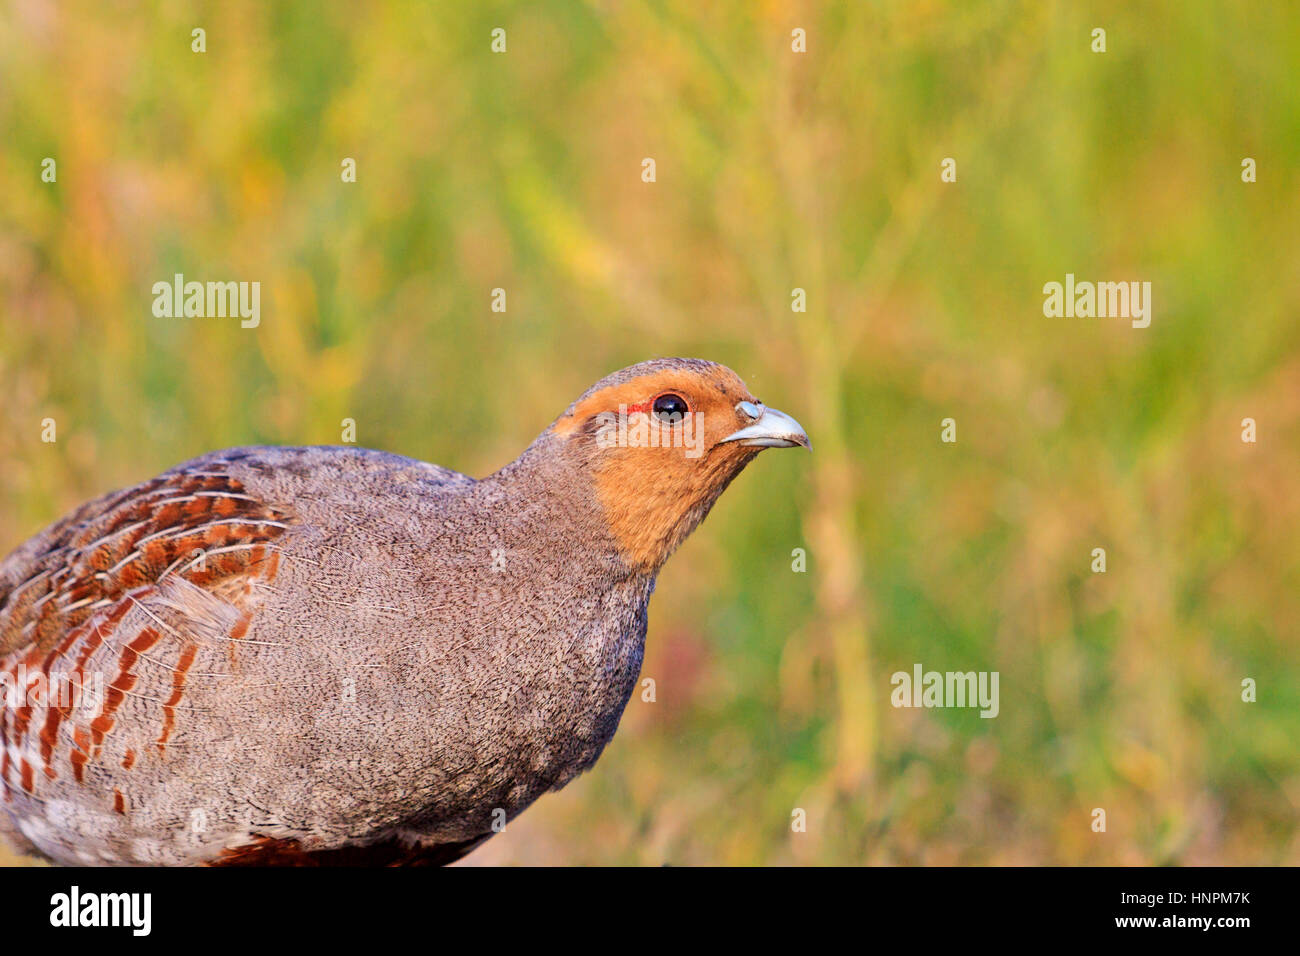 grey partridge portrait on field,Season 2017, opening of hunting, wildlife, wild bird Stock Photo